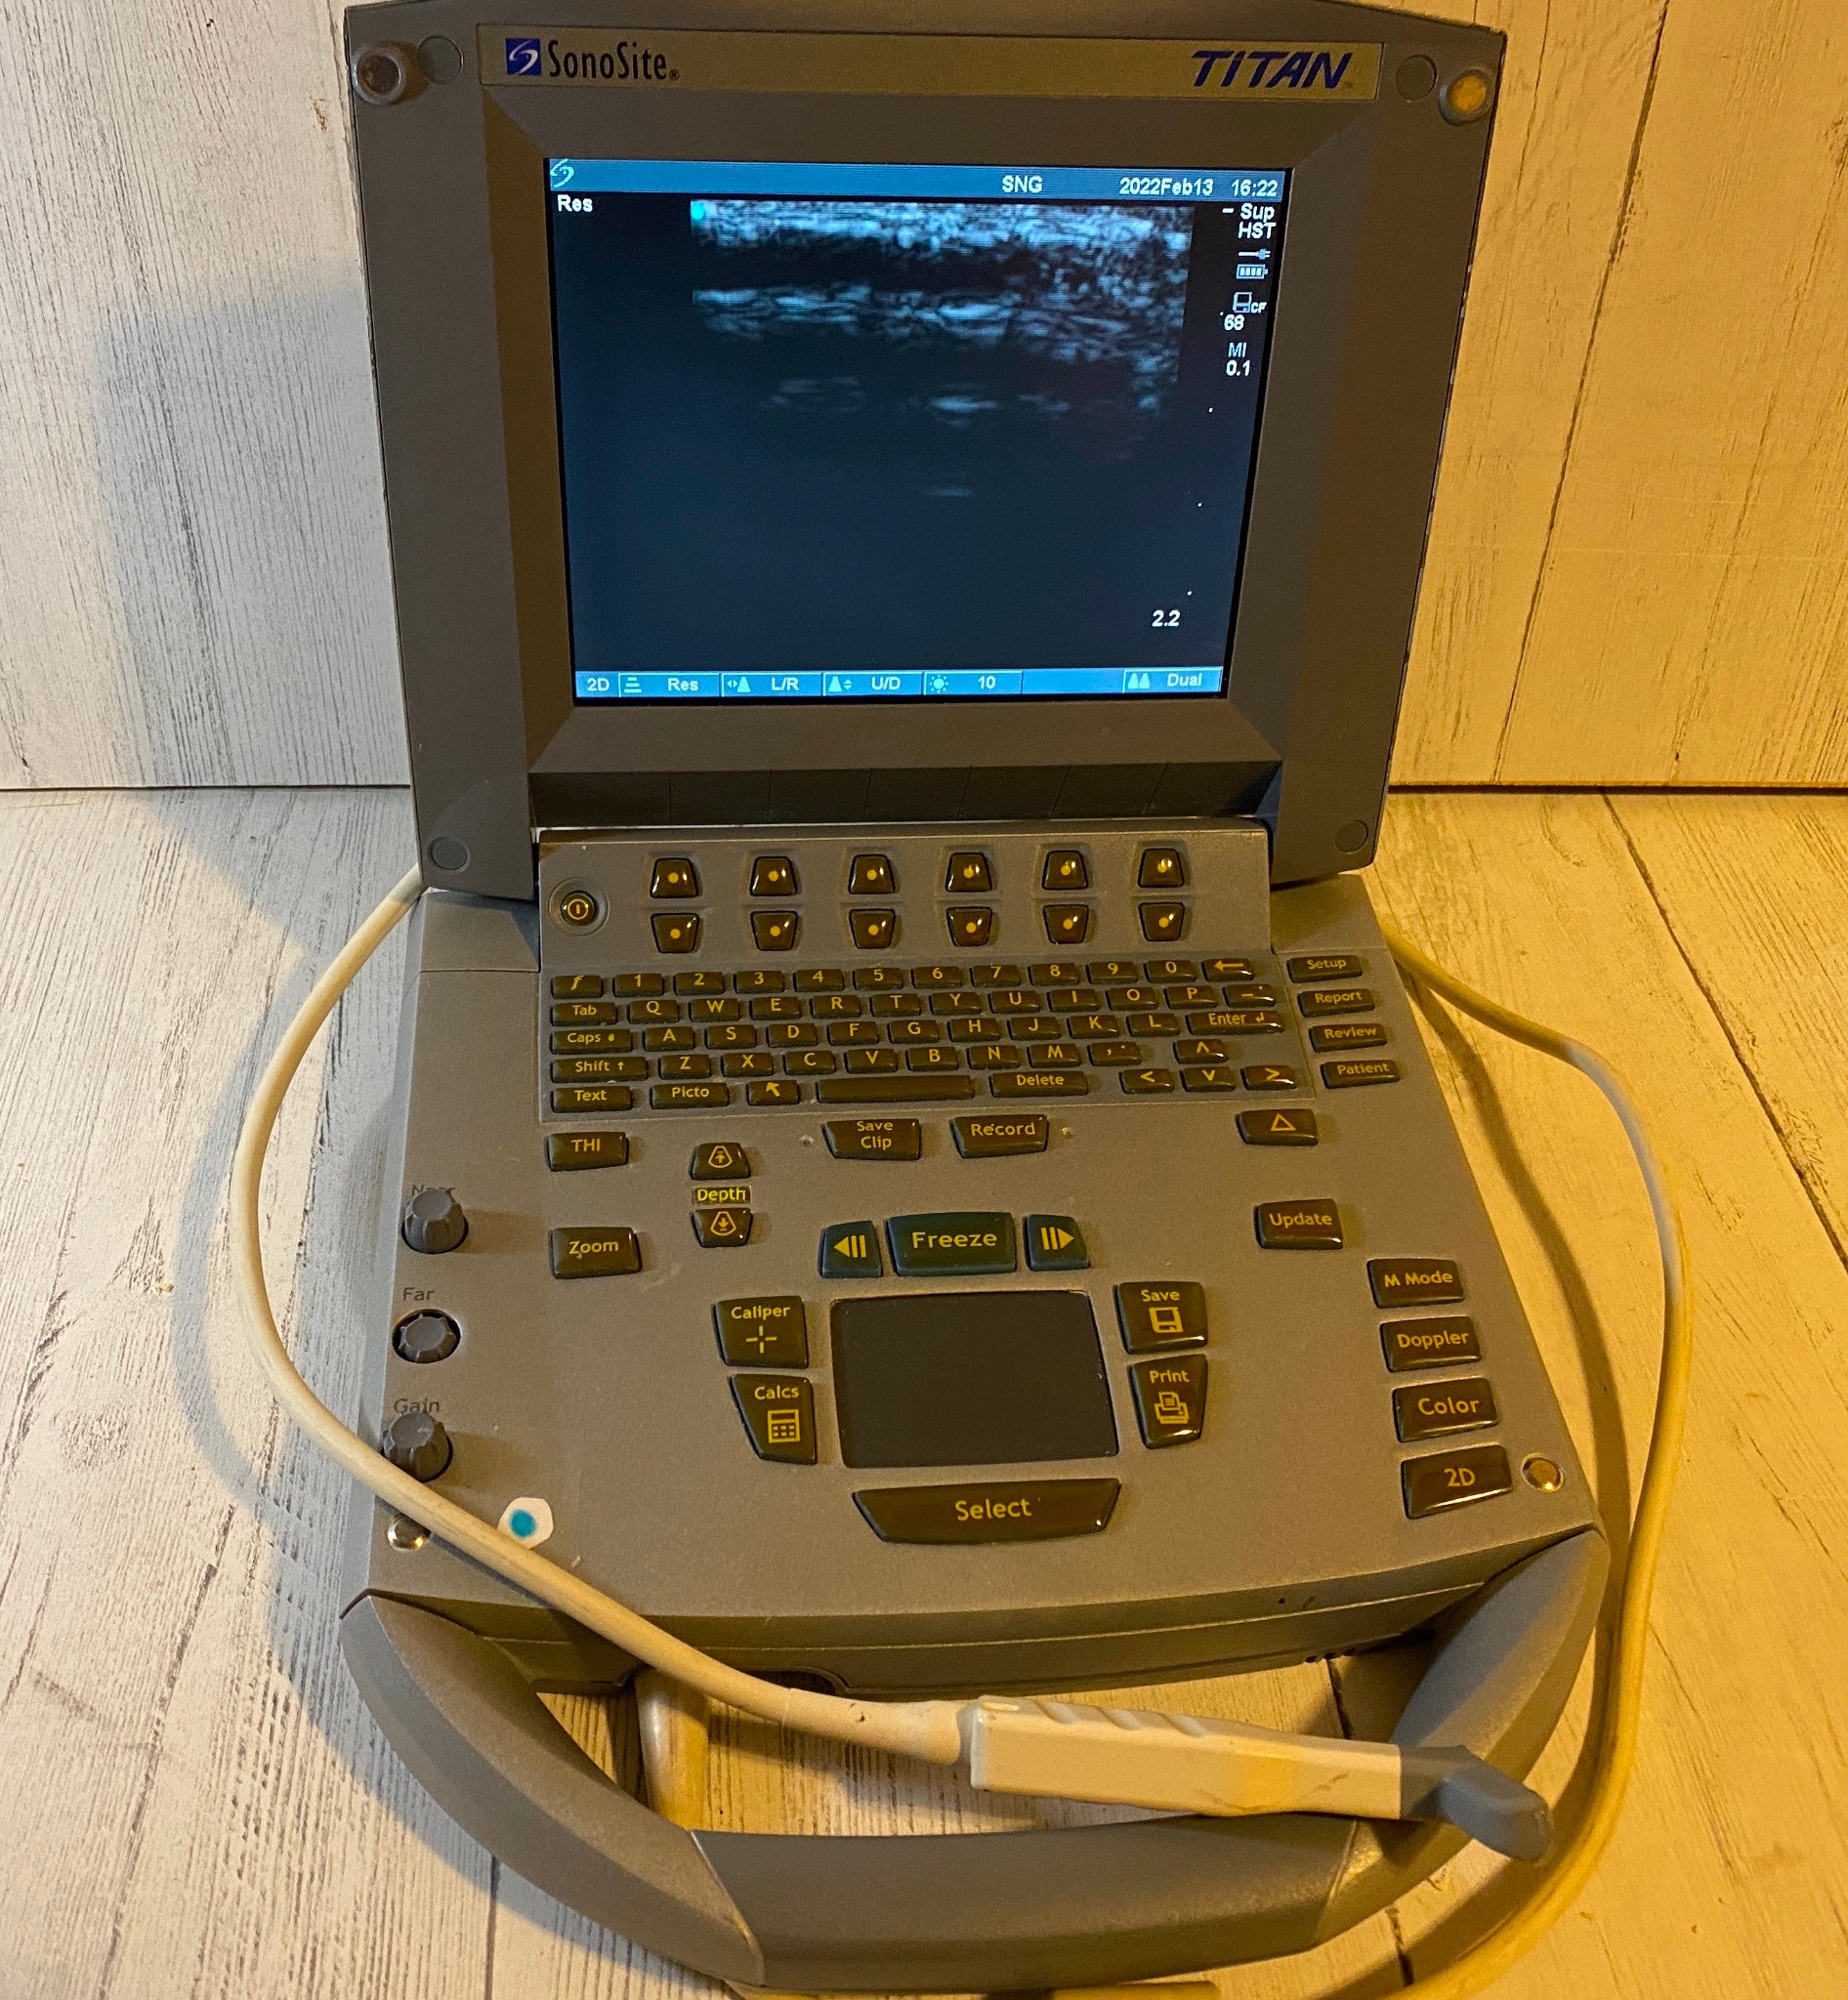 HST/10-5Mhz Hockey probe  For Sonosite Titan Portable Ultrasound 2004 DIAGNOSTIC ULTRASOUND MACHINES FOR SALE